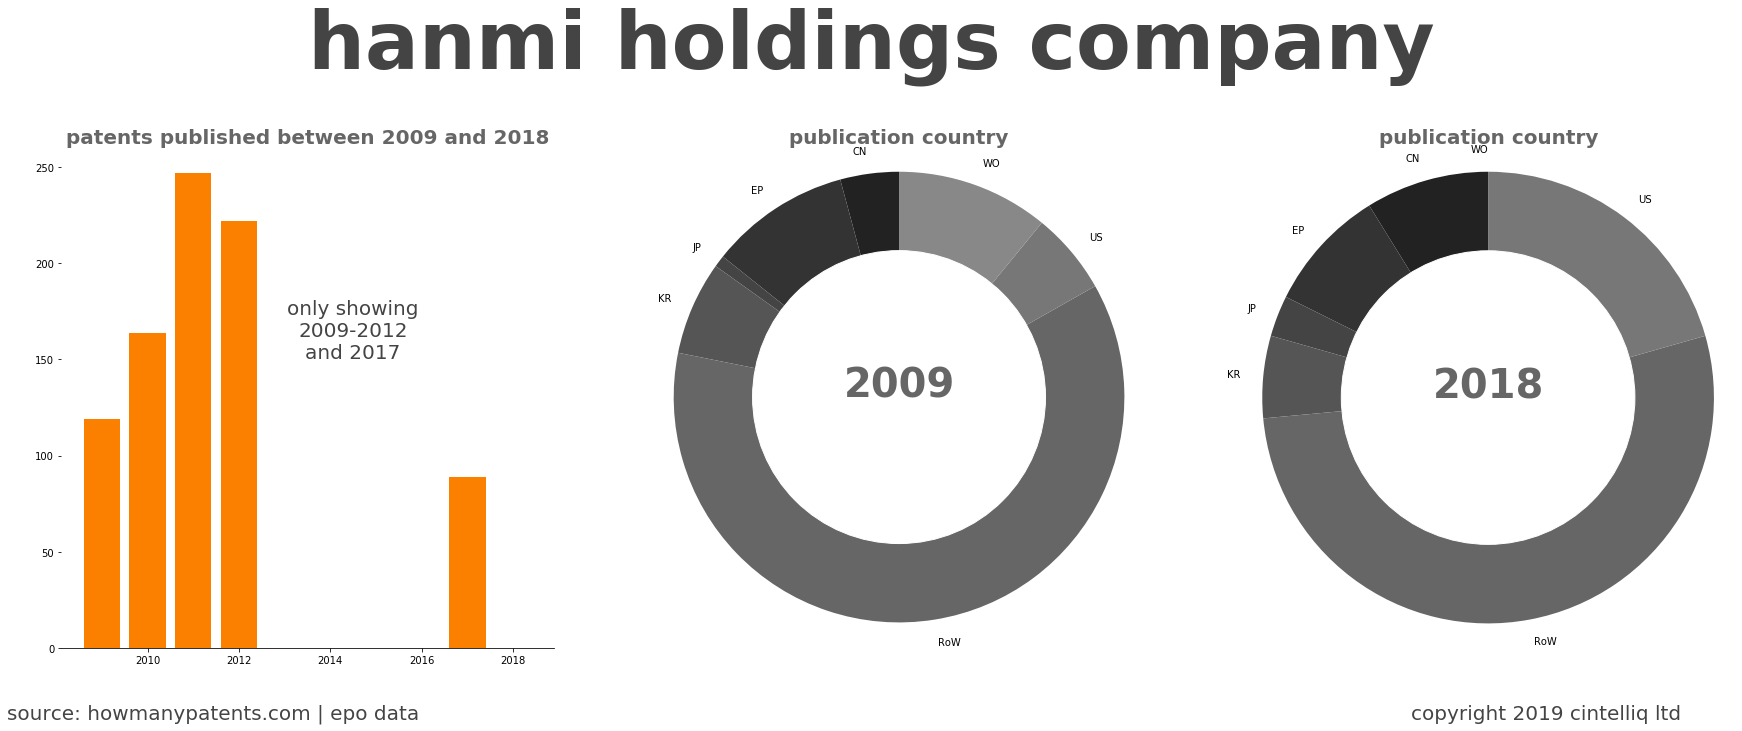 summary of patents for Hanmi Holdings Company